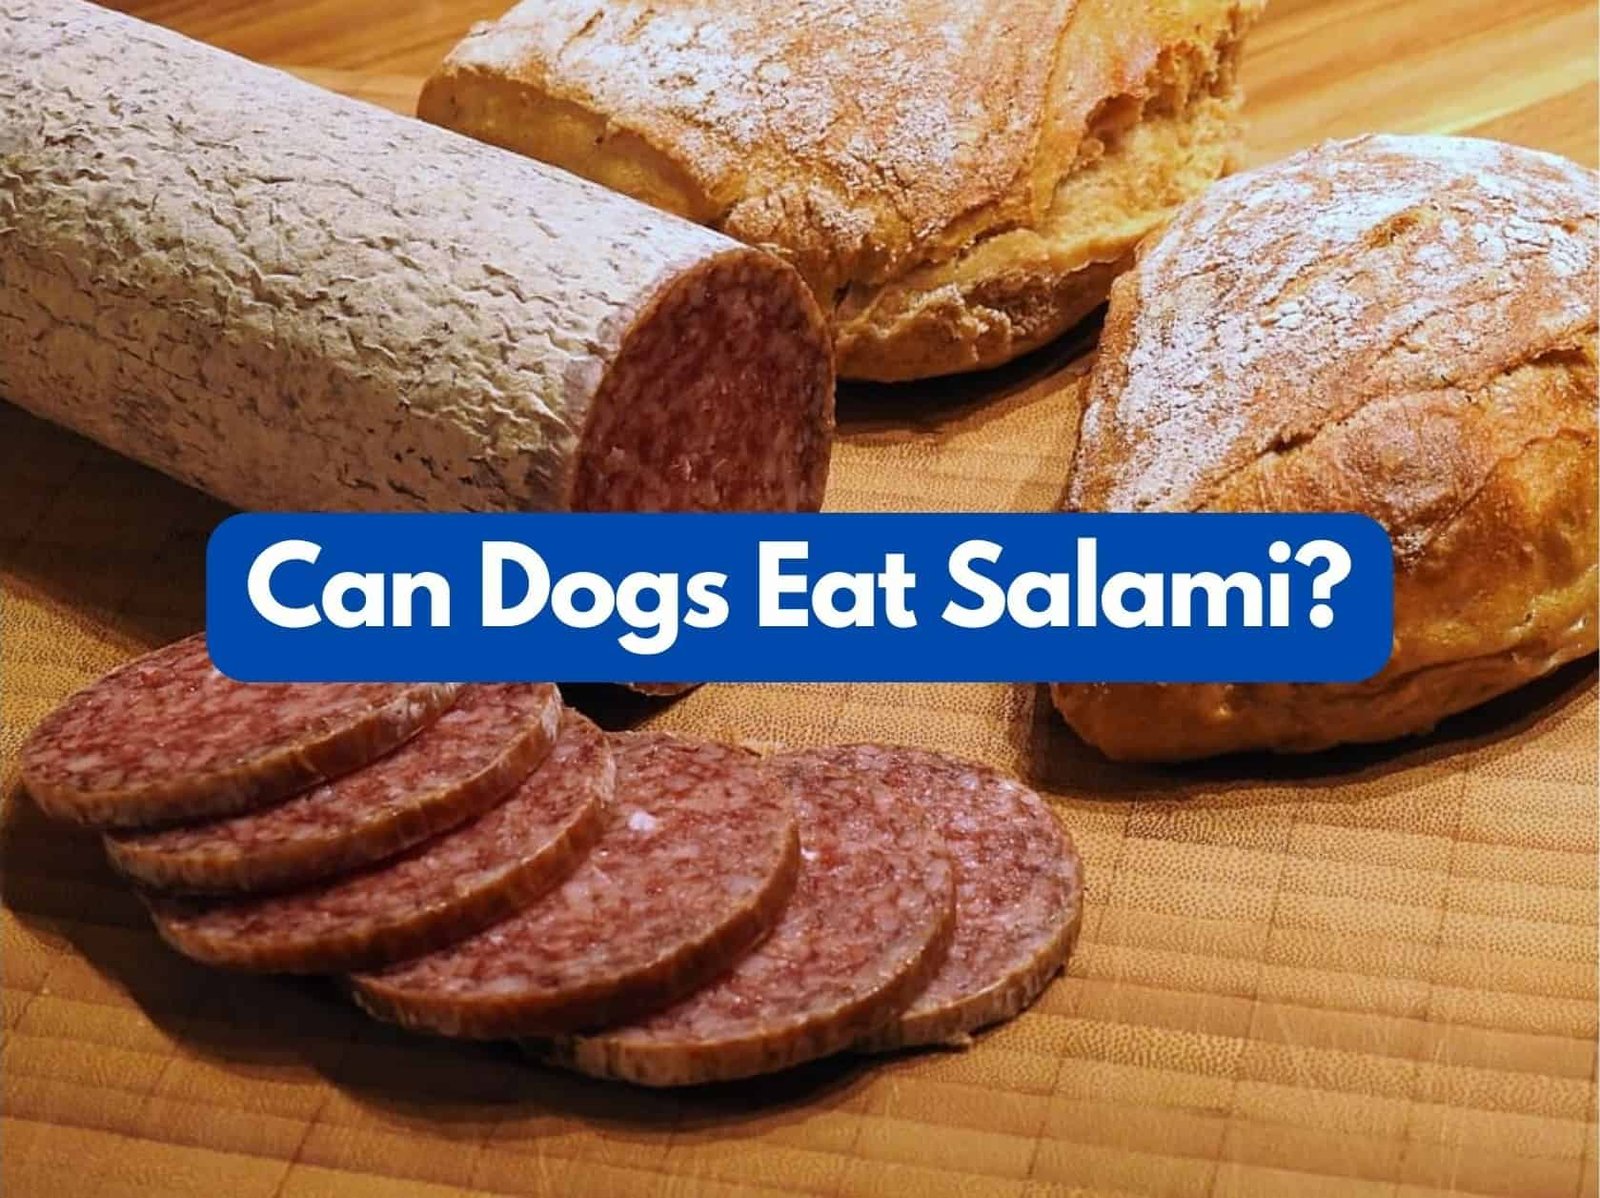 Can my dog eat salami